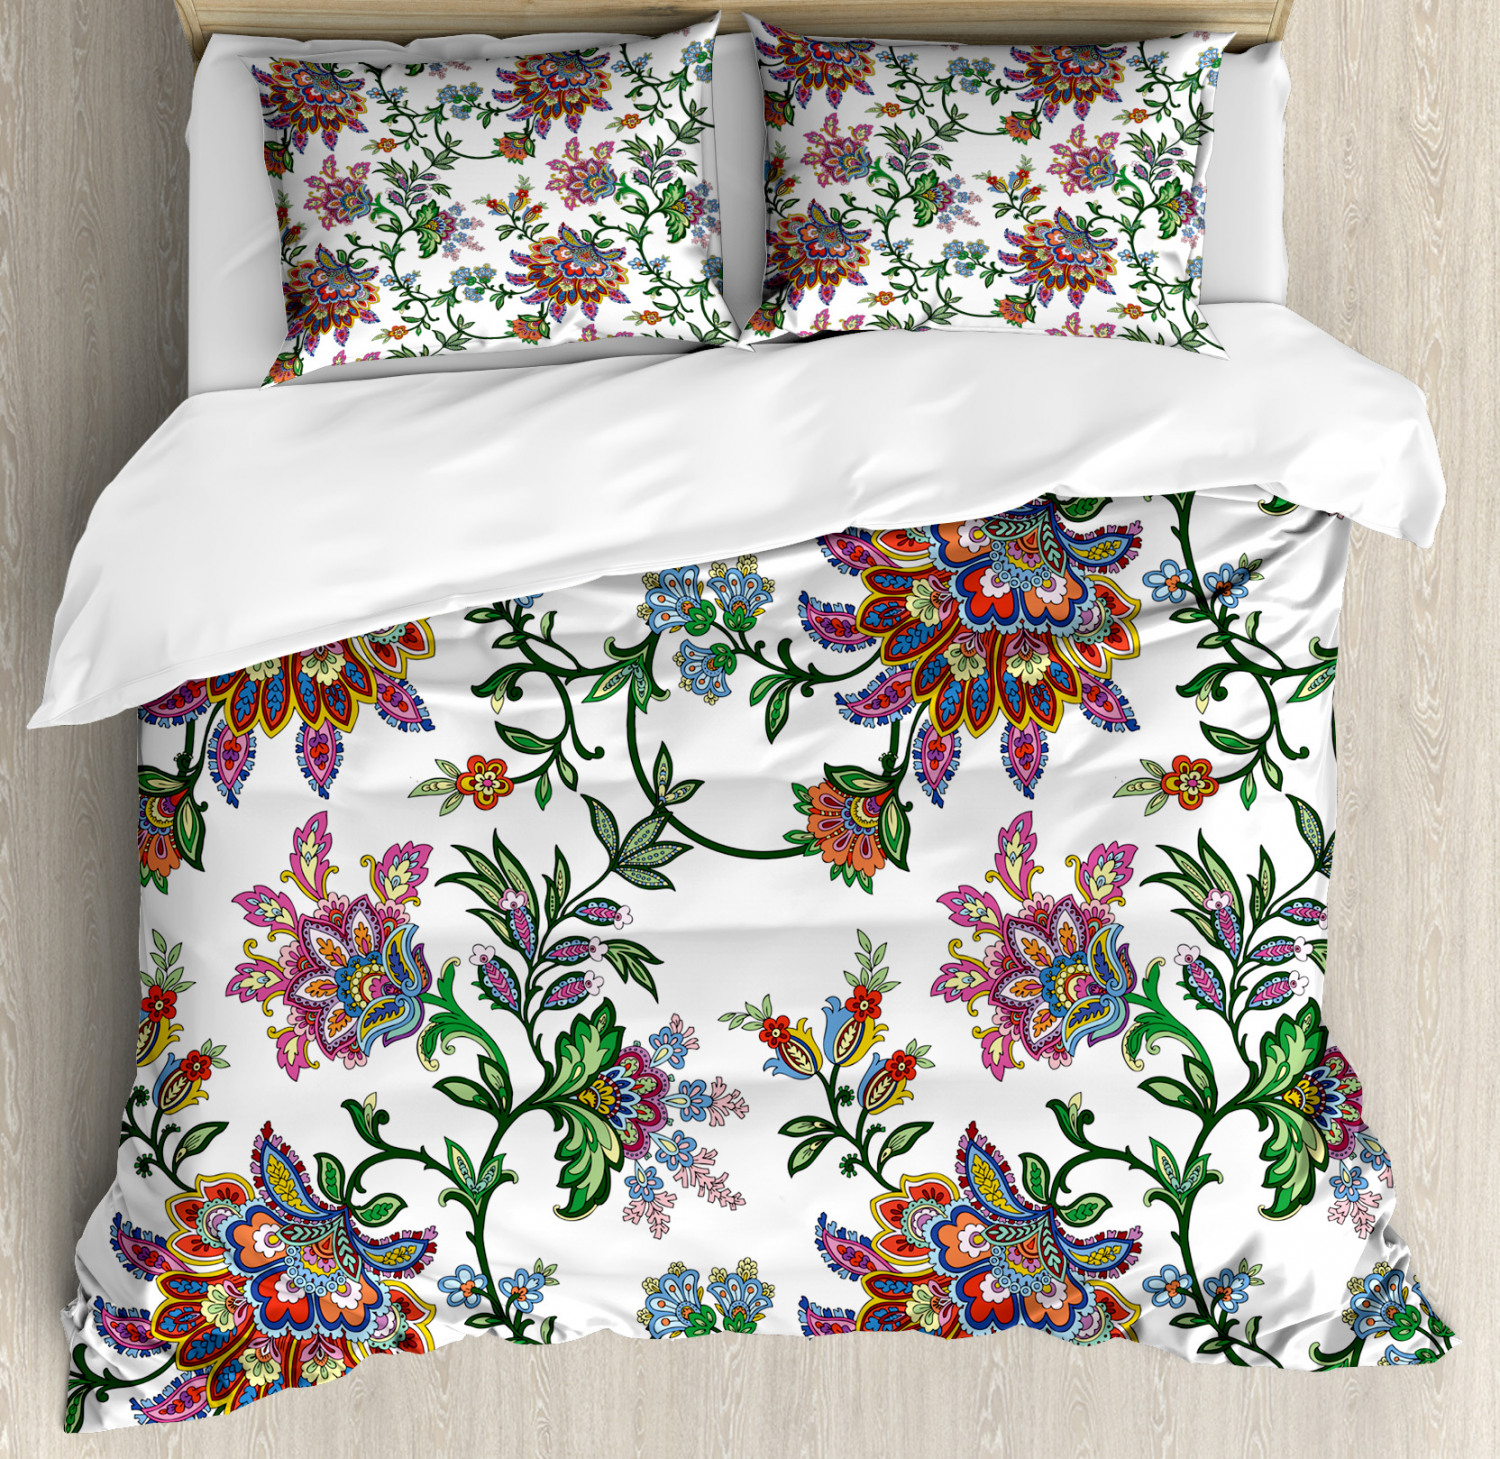 Flower Duvet Cover Set with Pillow Shams Vintage Floral Ornaments Print ...